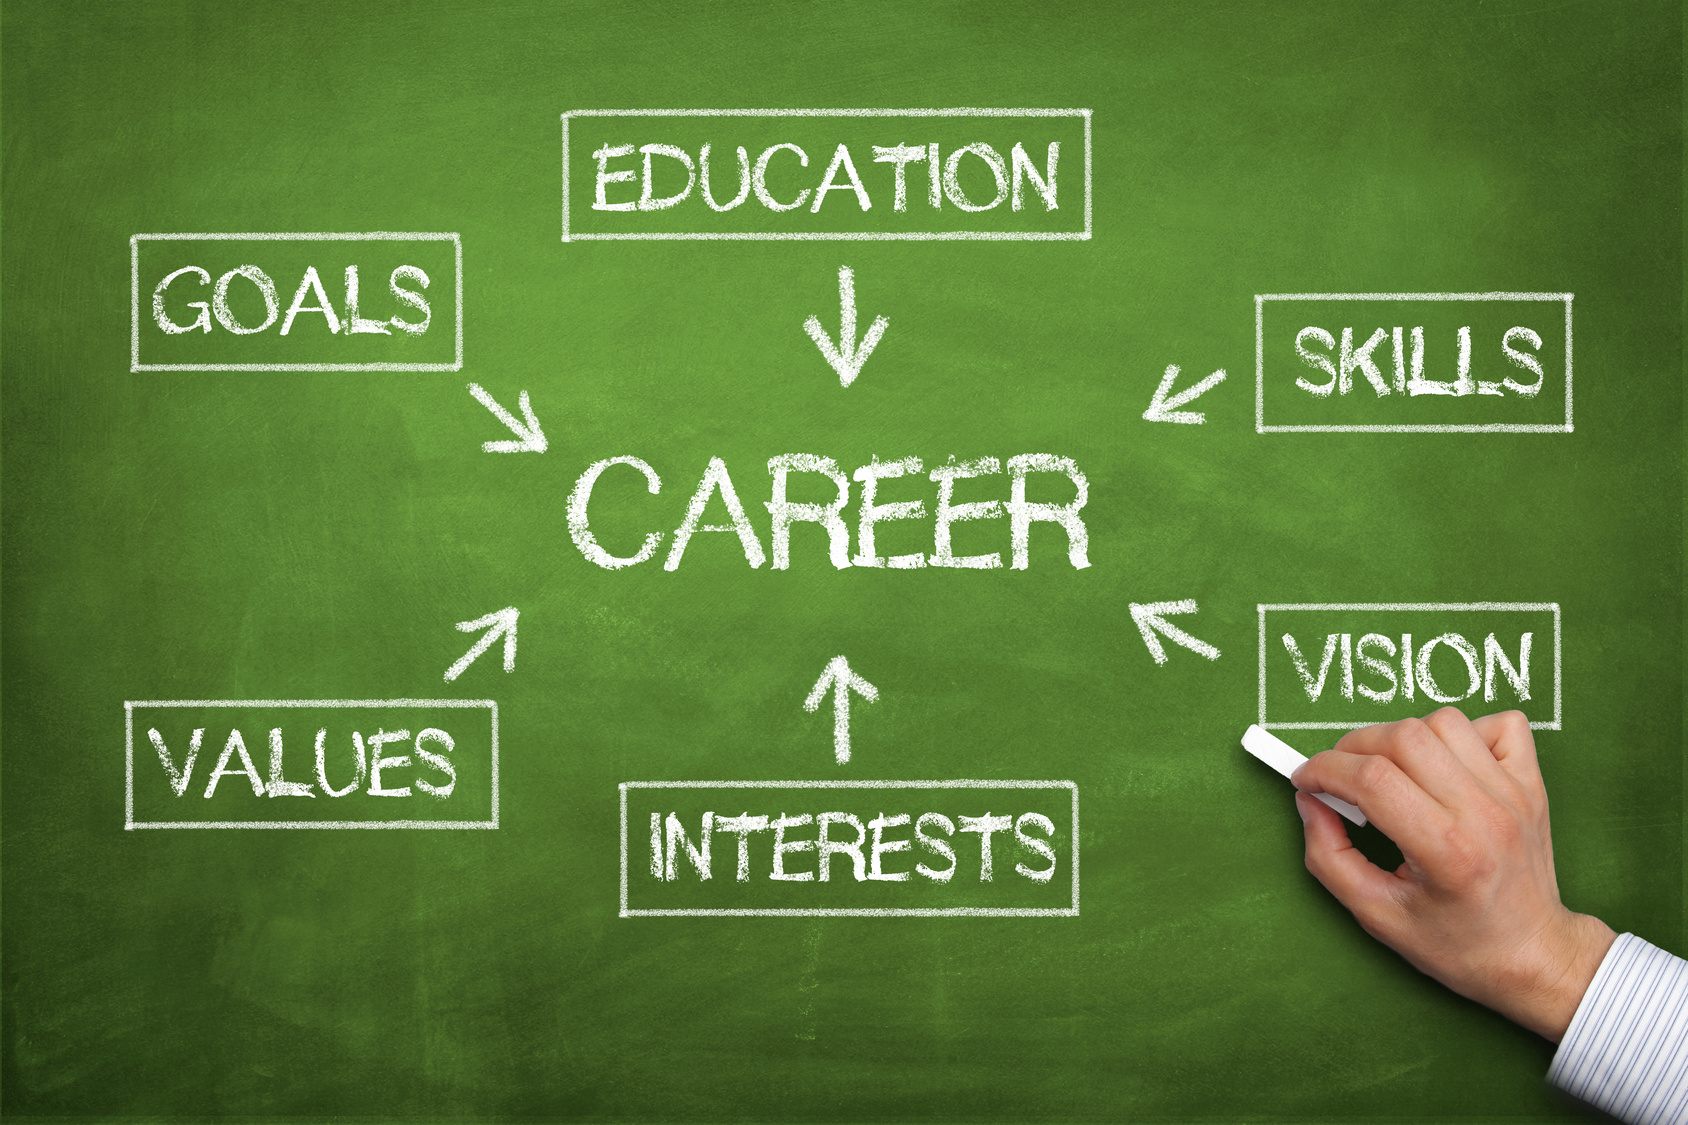 Make quality better. Future career тема. My Future career презентация. Будущая карьера на английском. Choosing a Profession.